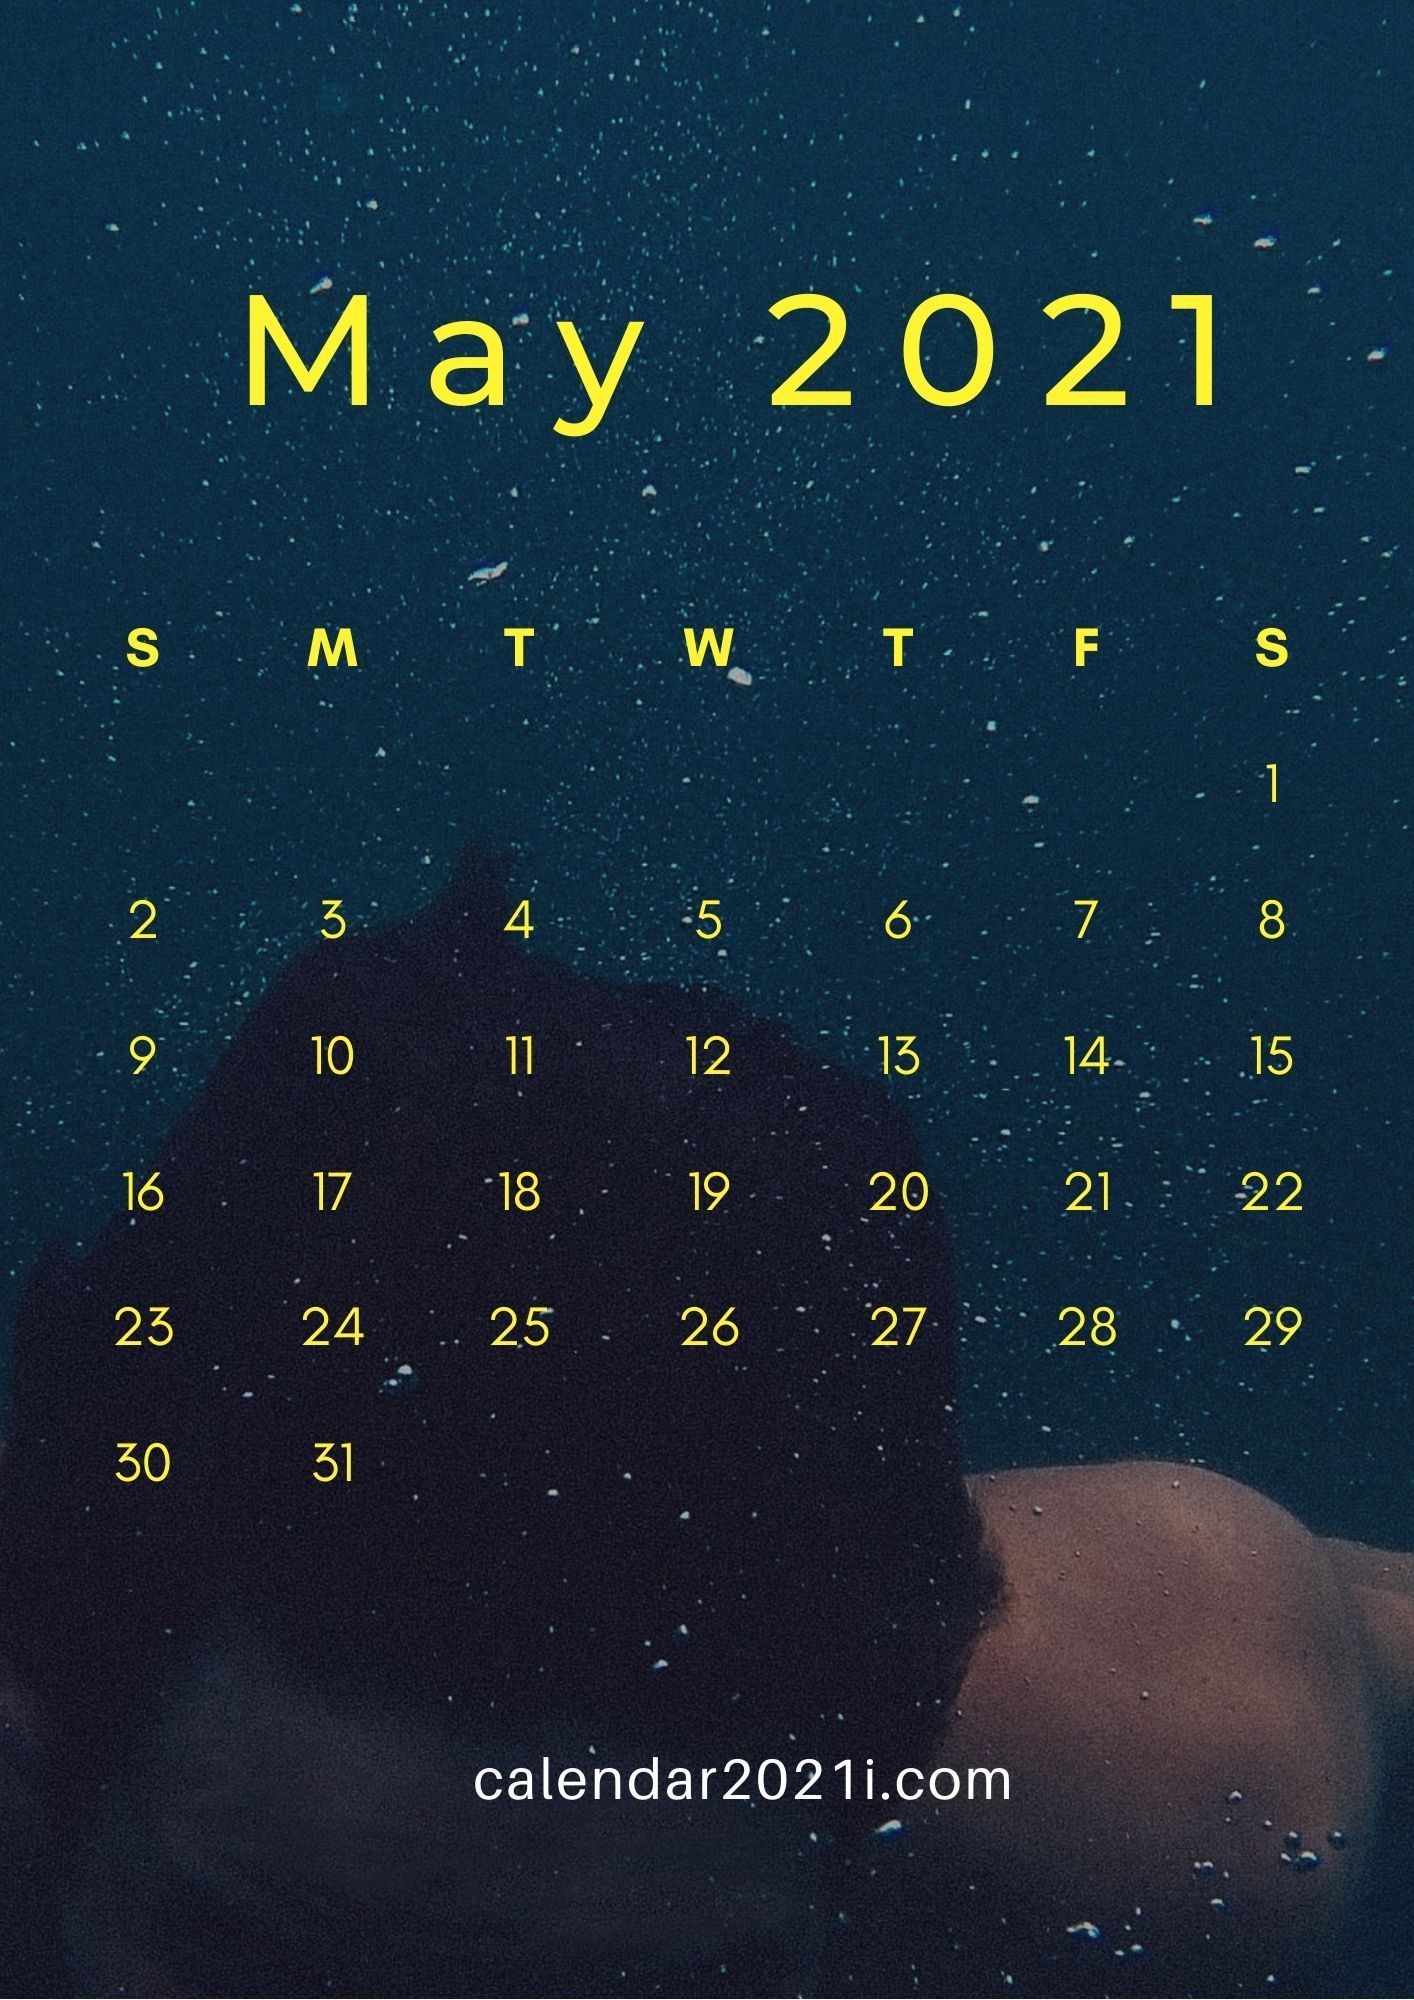 May 2021 Calendar HD iPhone Wallpaper to use as phone background screen. Calendar wallpaper, 2021 calendar, Free printable calendar